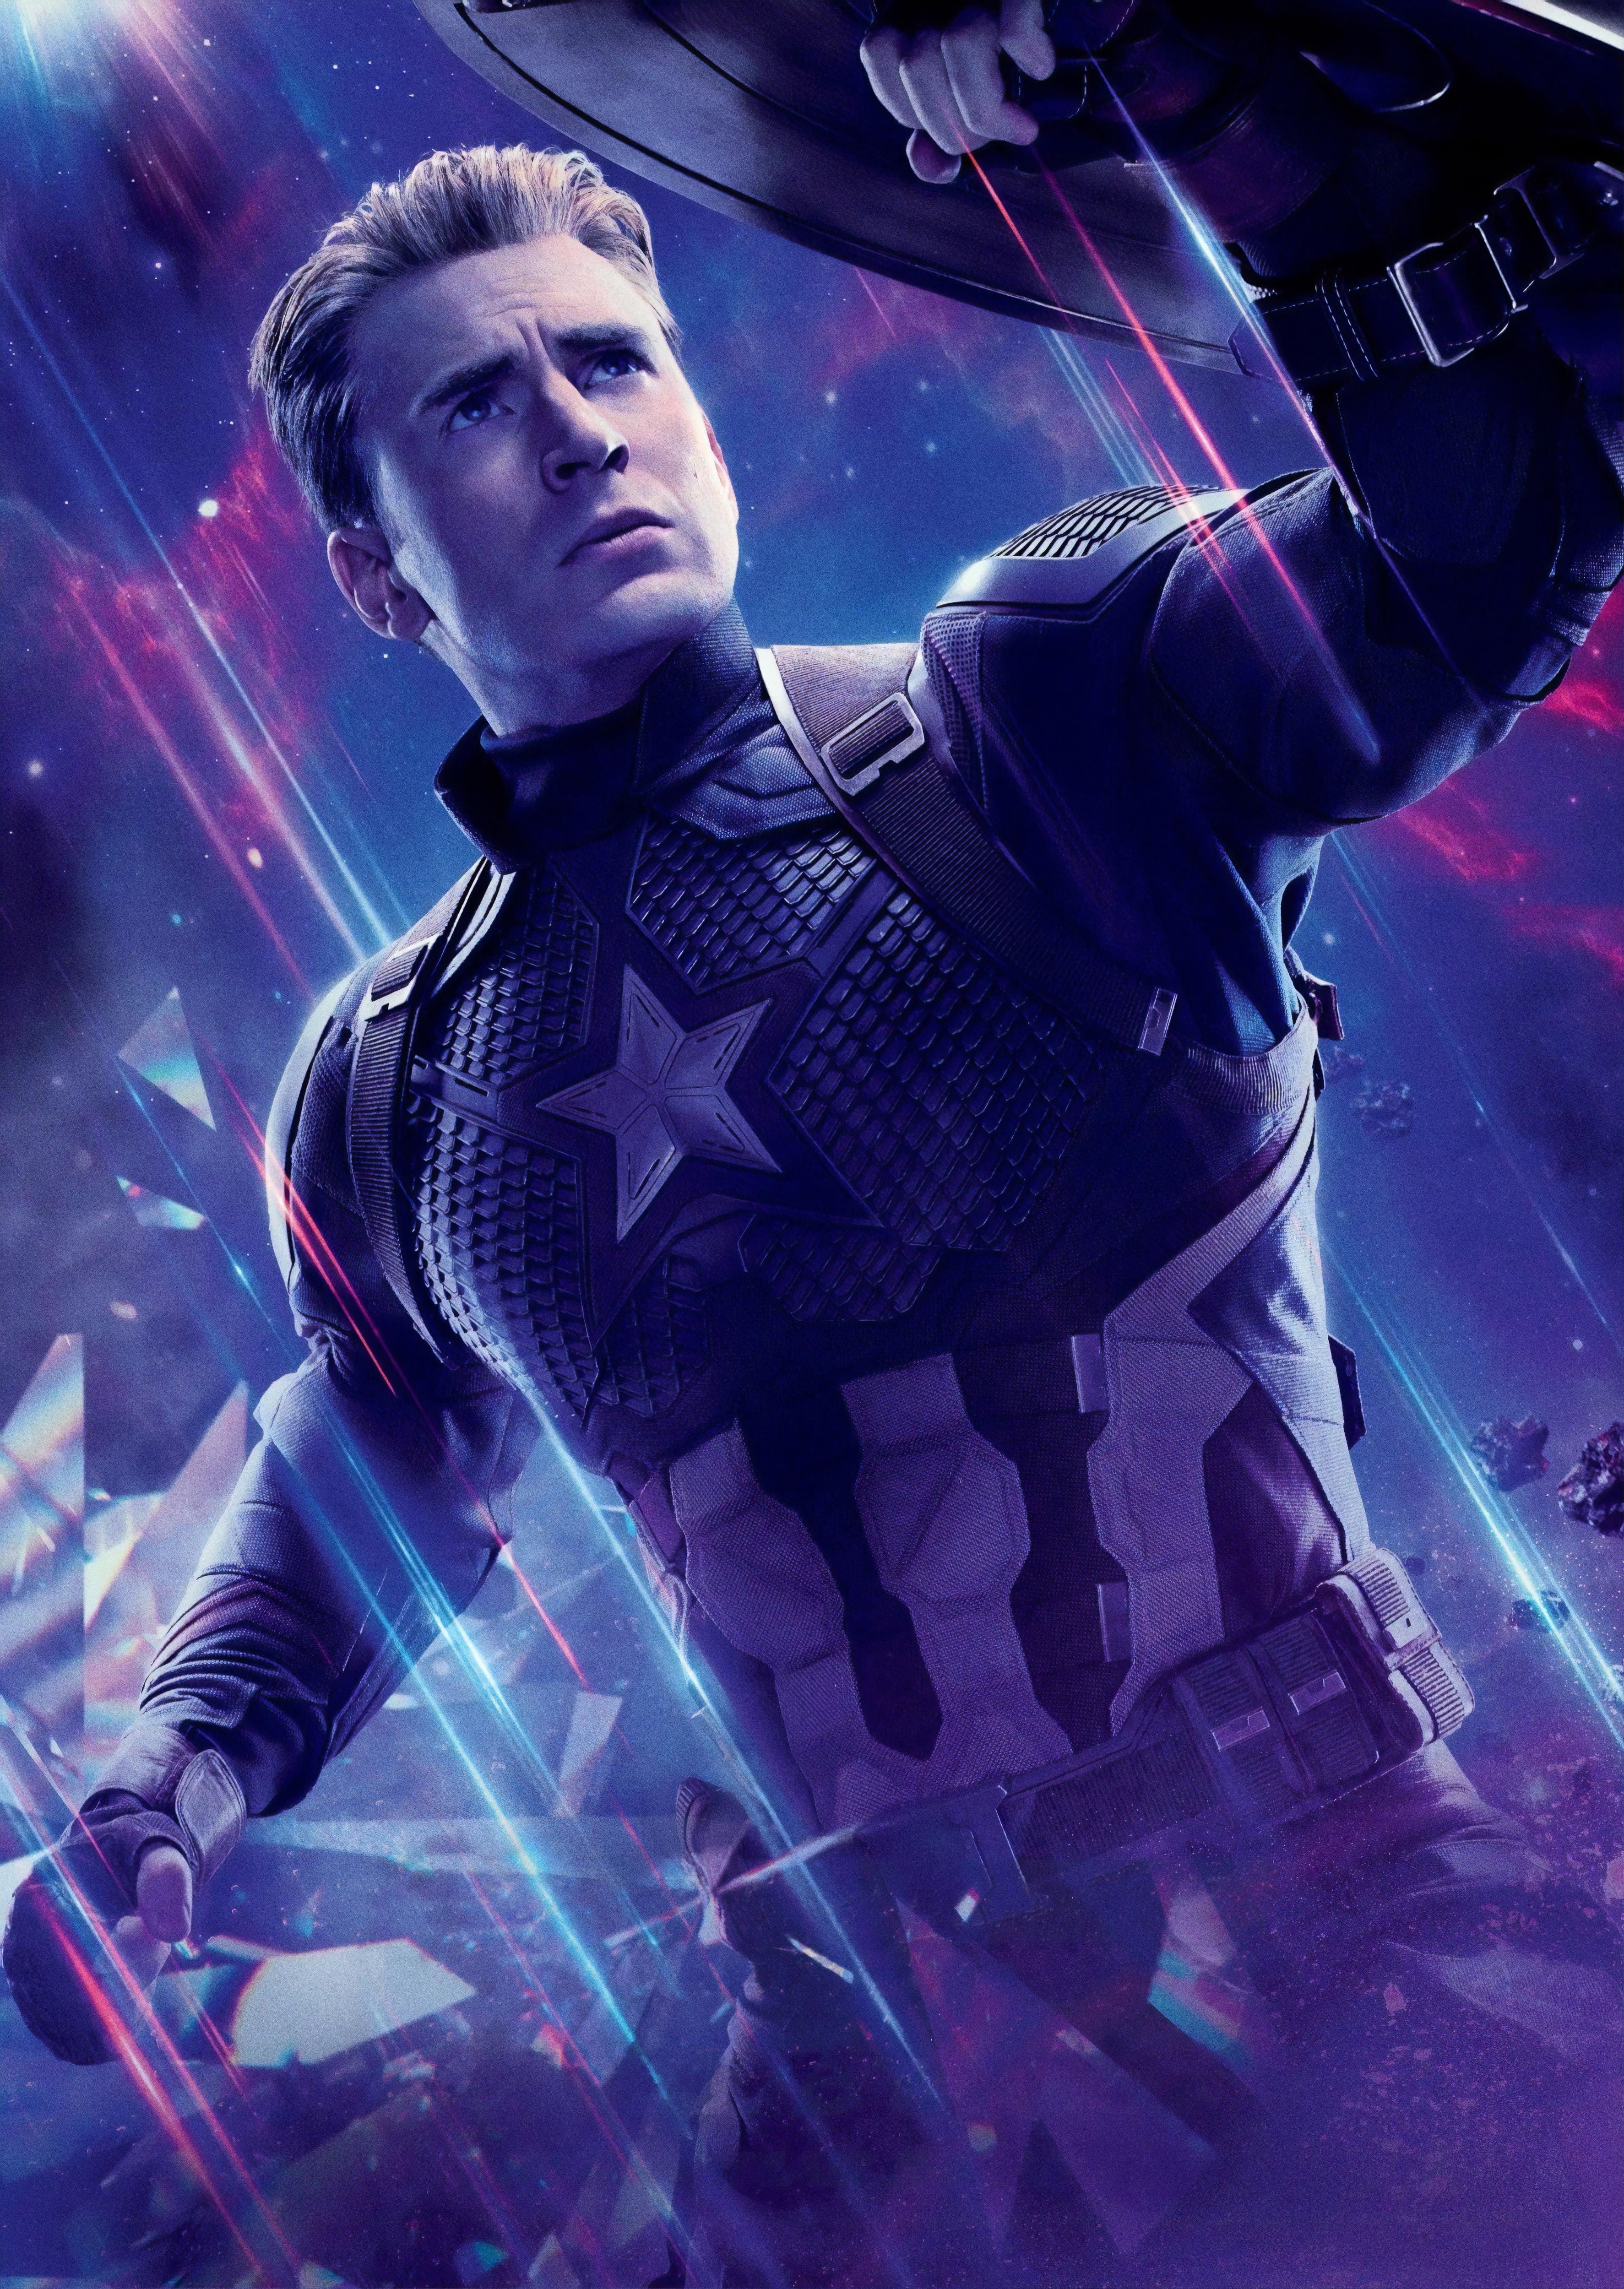 Captain America Avengers Games Wallpapers